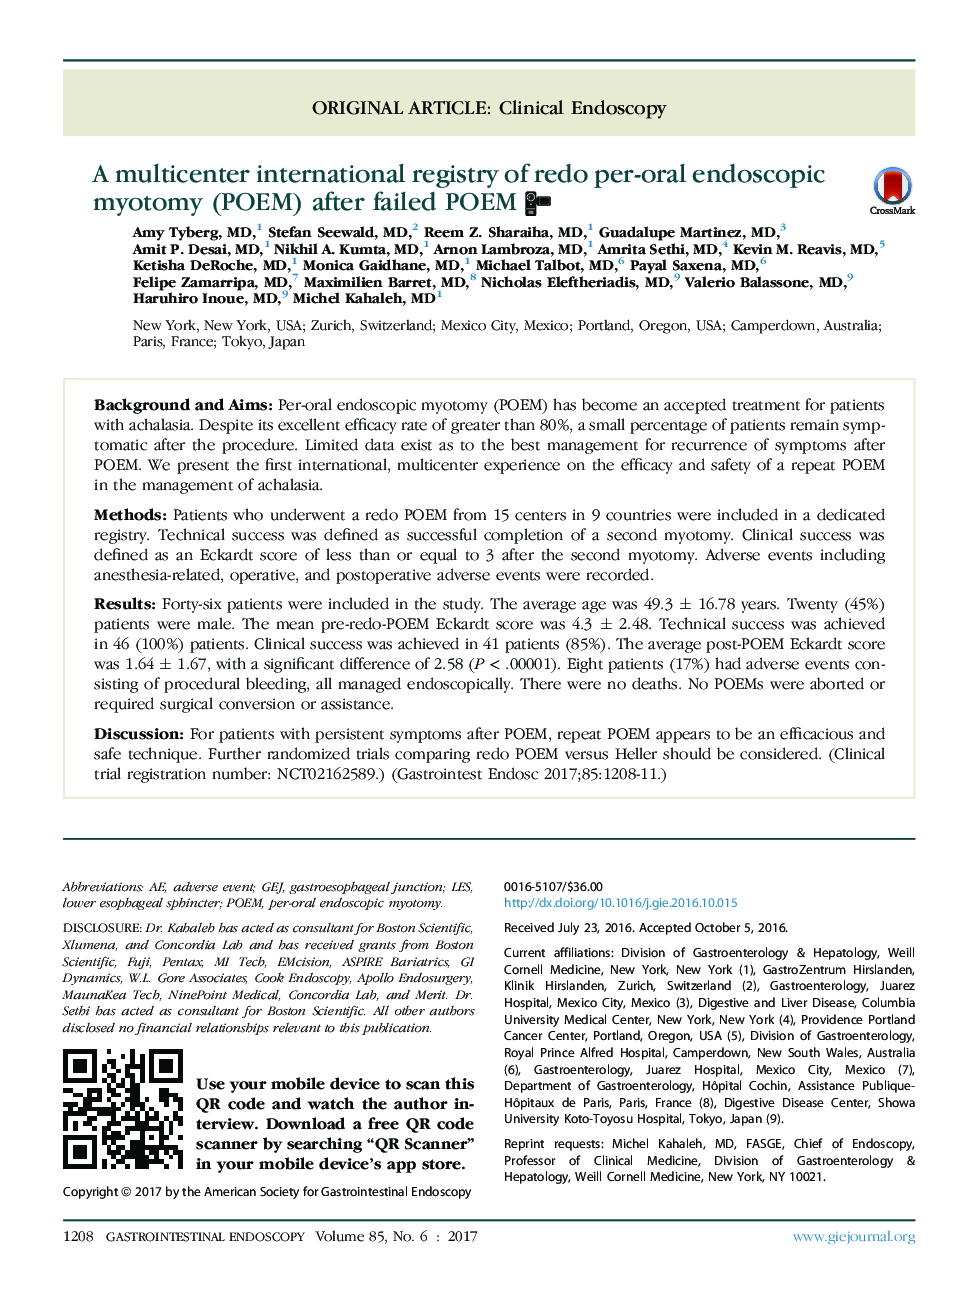 A multicenter international registry of redo per-oral endoscopic myotomy (POEM) after failed POEM